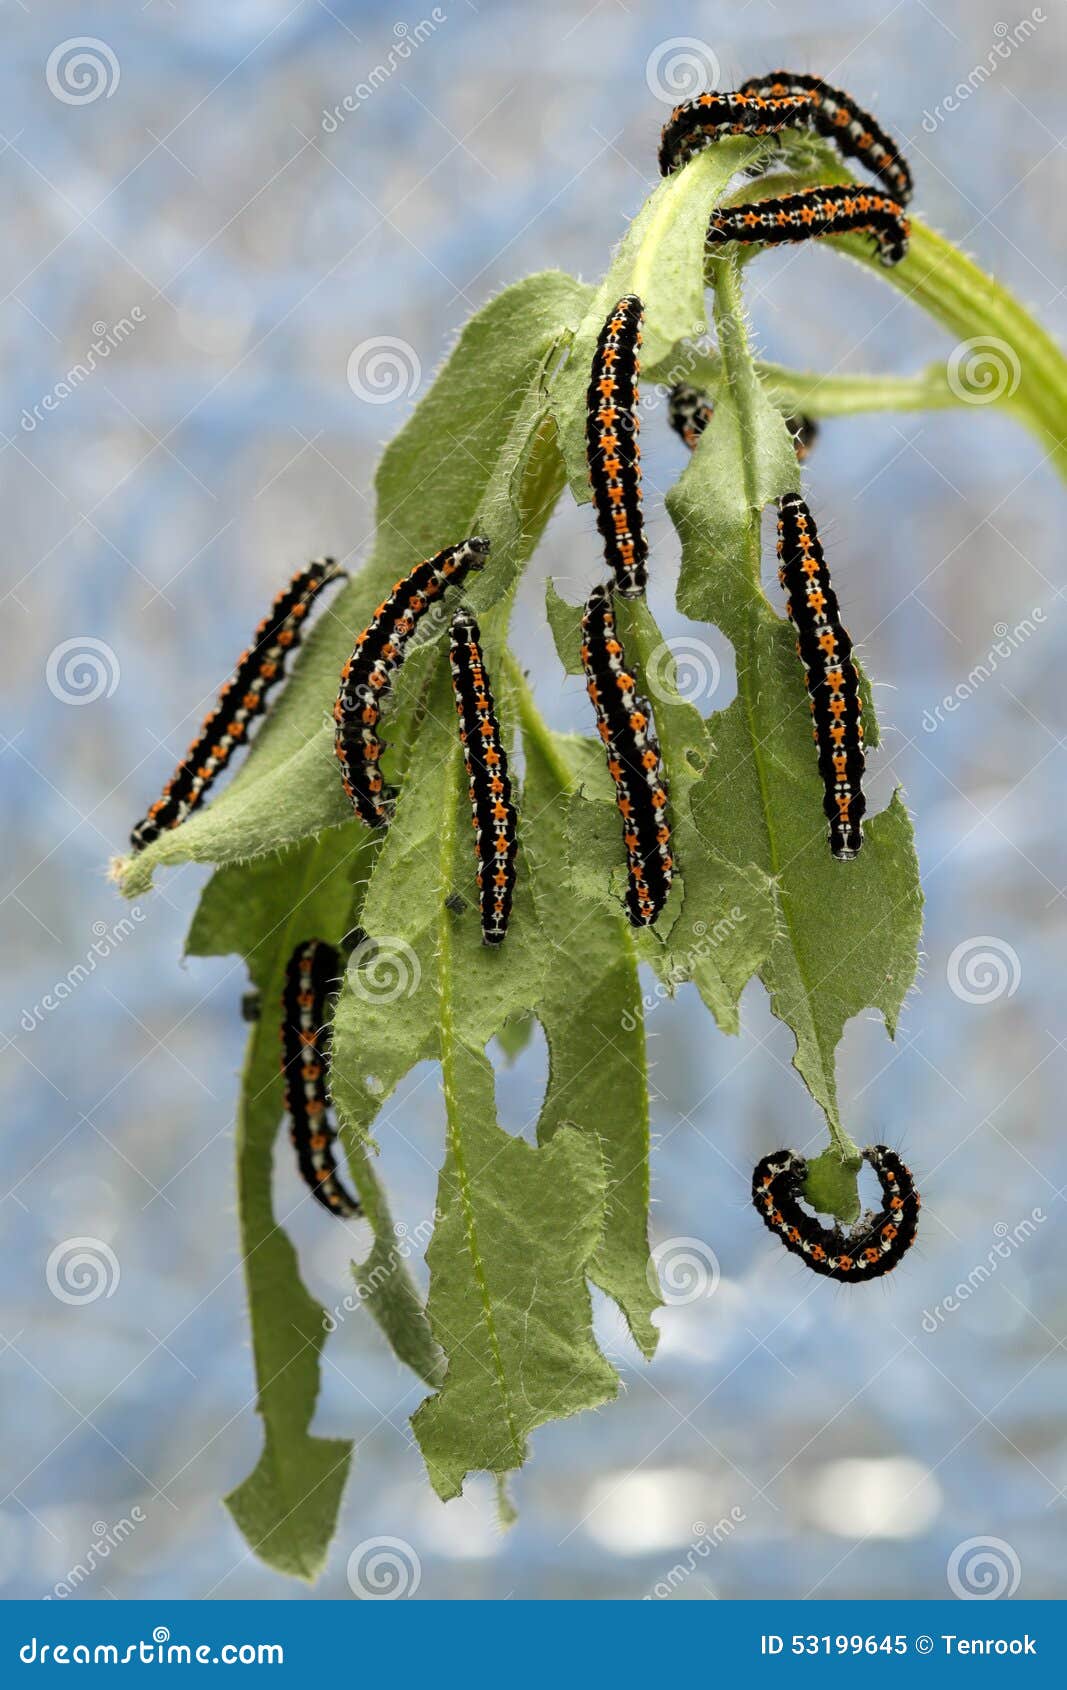 caterpillars devour the leaves